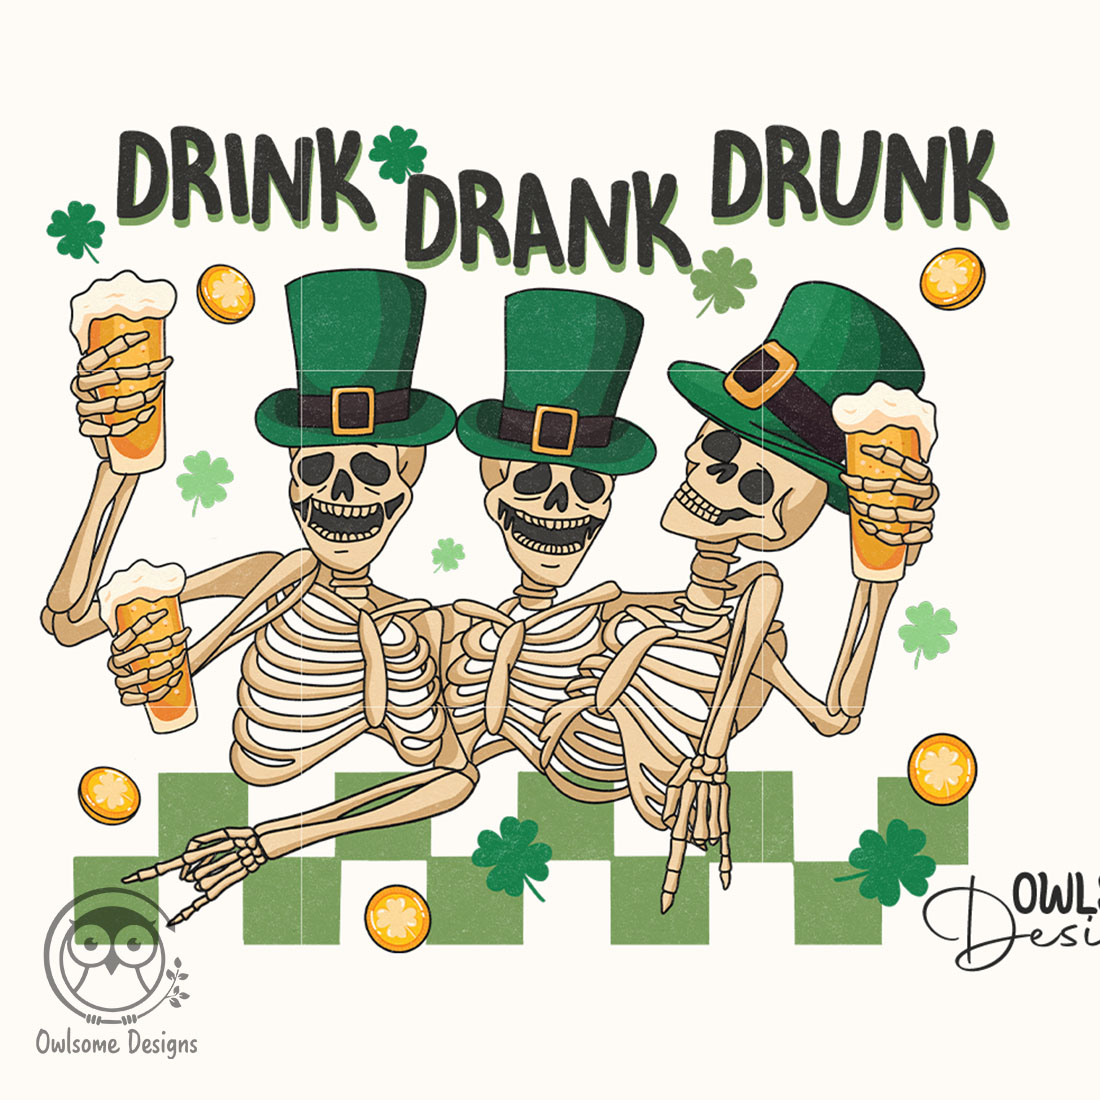 Funny Skeleton Patricks Day PNG cover image.